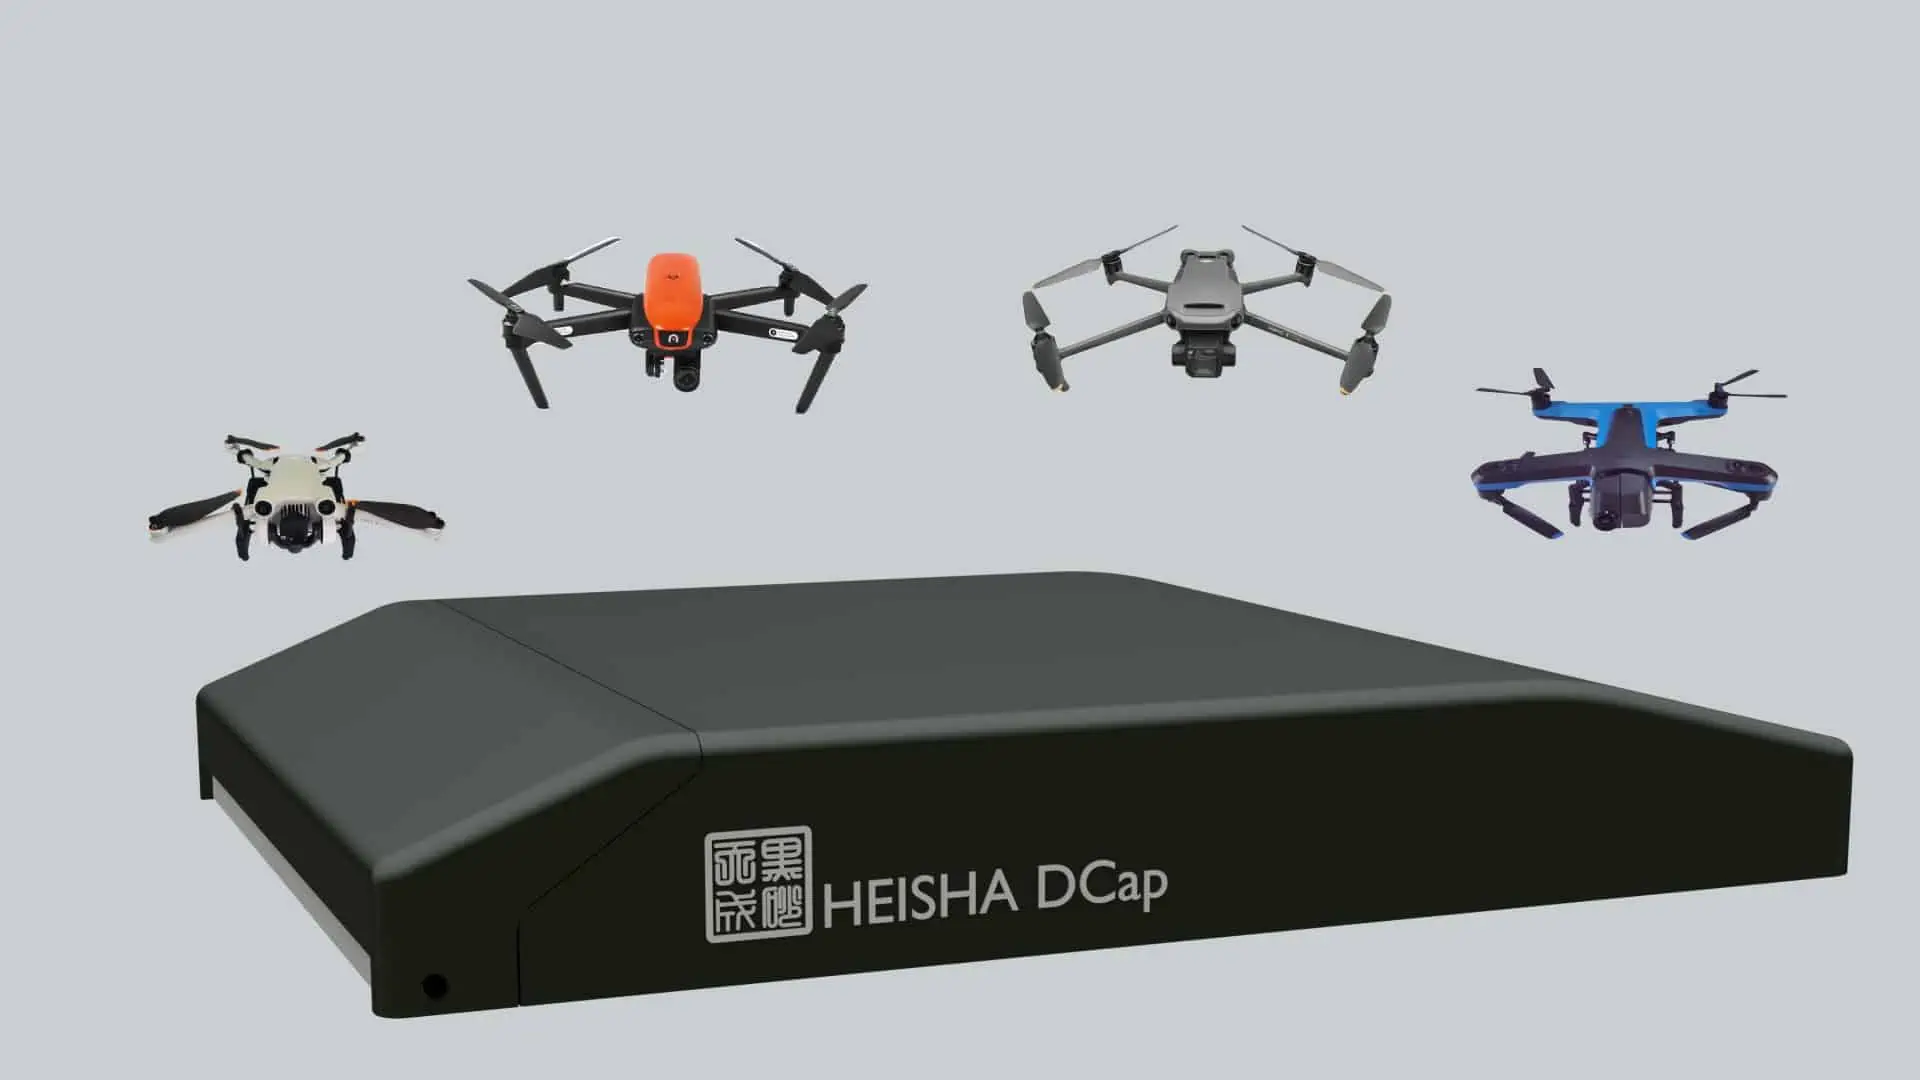 Stazione di ricarica per droni